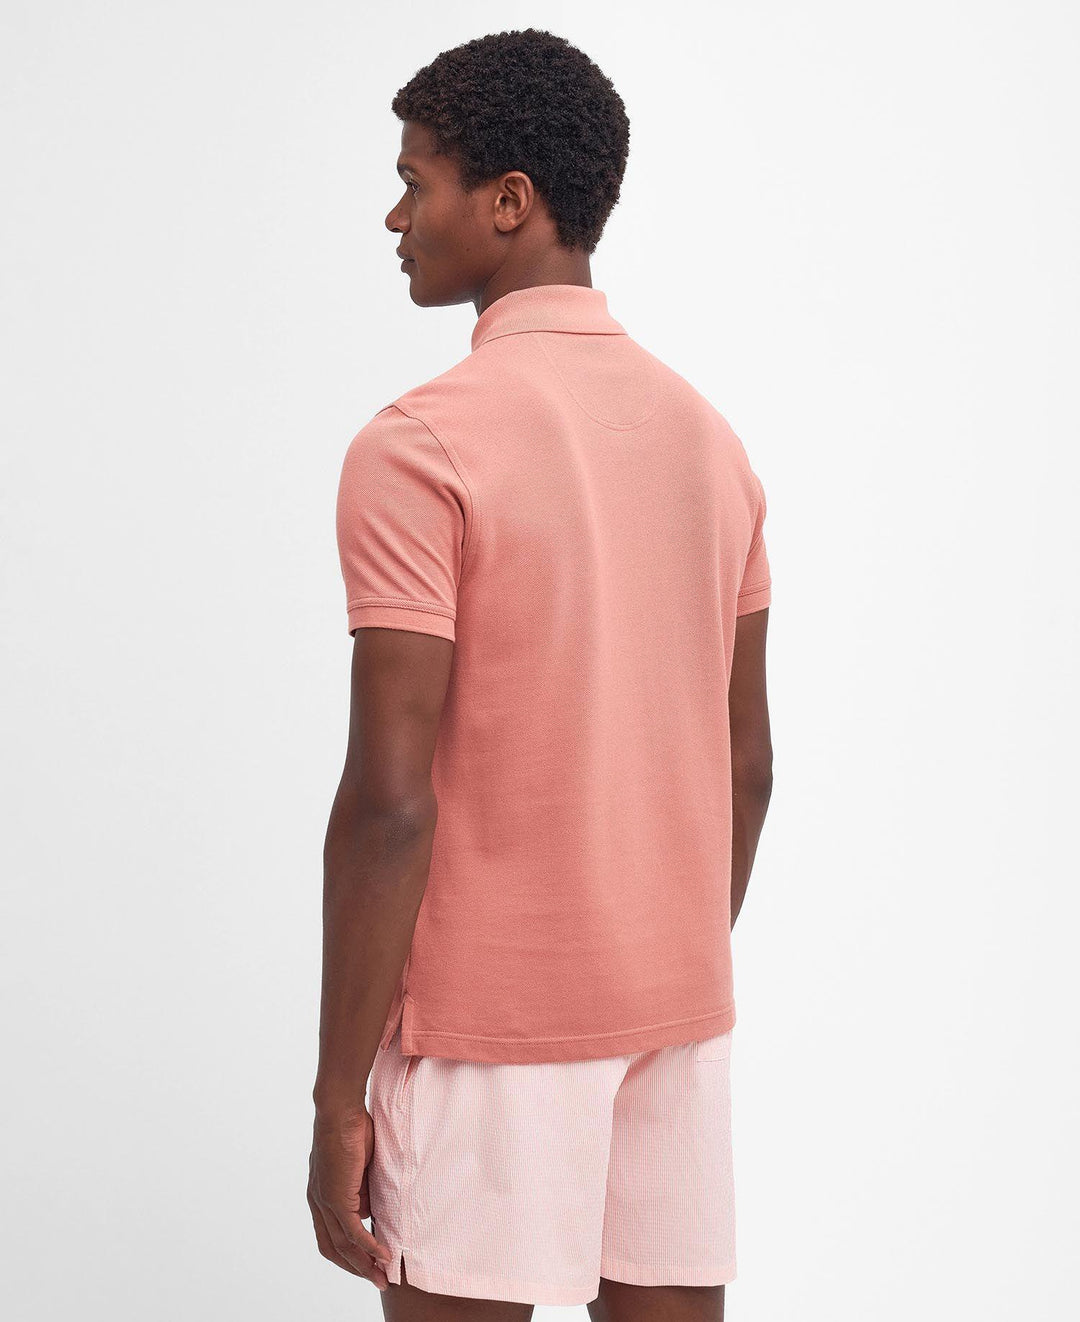 Cotton Polo Shirt Pink Clay